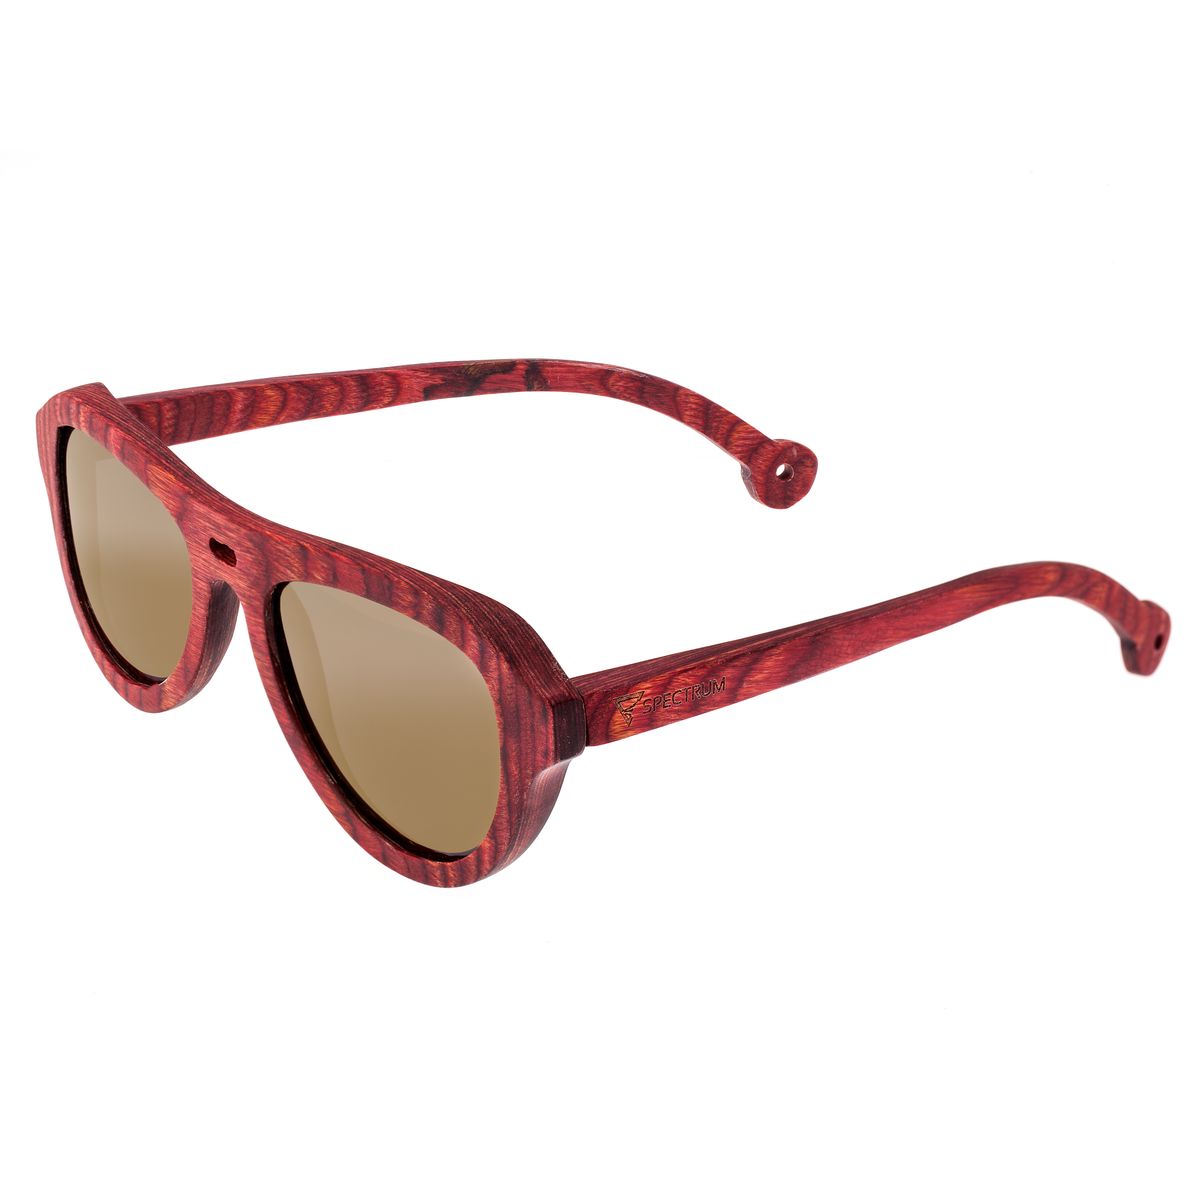 Photos - Sunglasses Spectrum Polarized Wooden  - Keaulana - Cherry/Gold SSG 